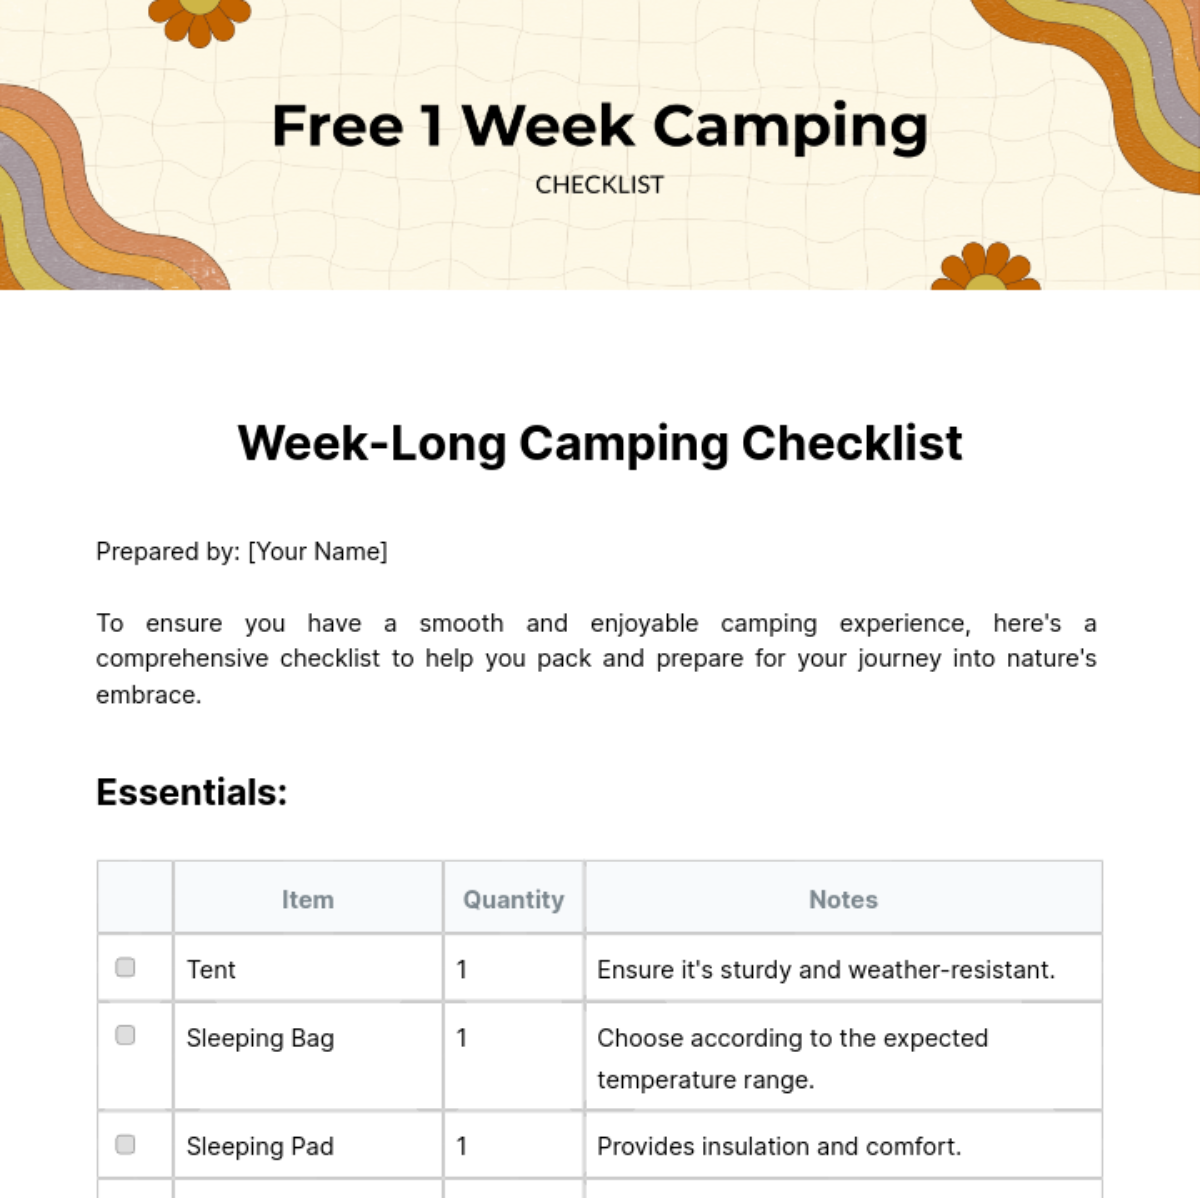 1 Week Camping Checklist Template